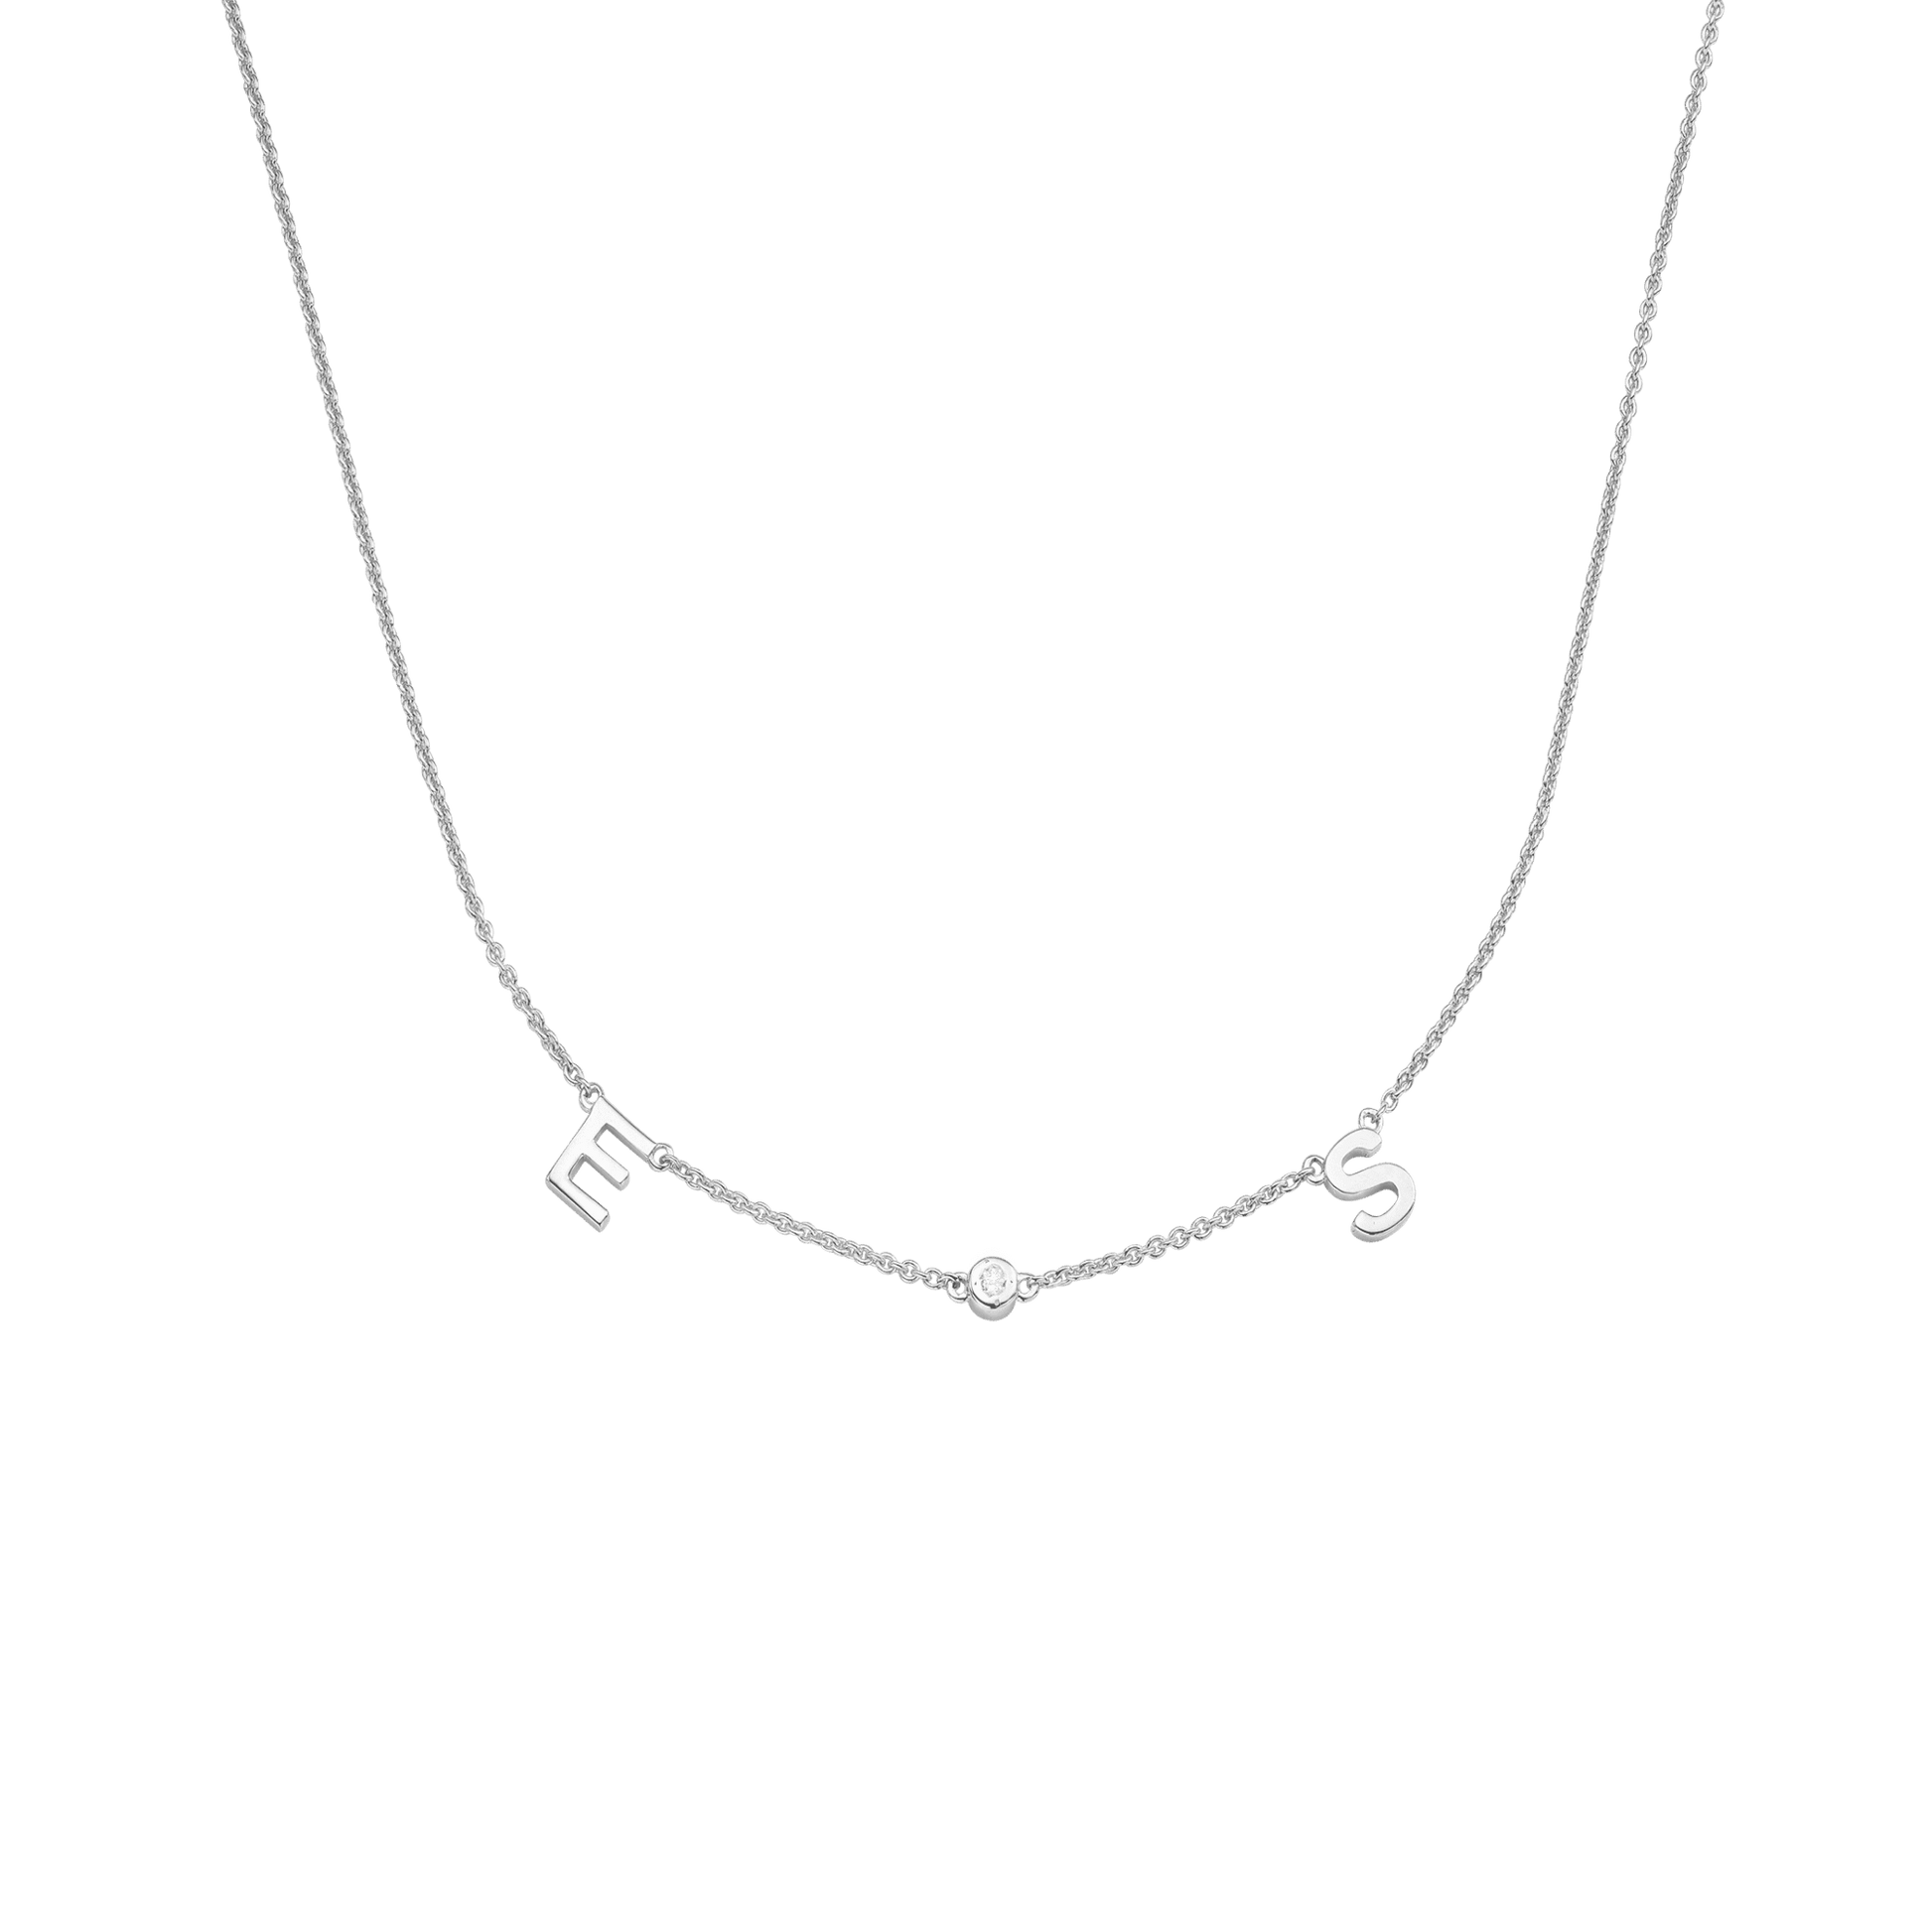 Collier Initial & Diamant(s) - Argent 925 Necklaces magal-dev 1 Initiale + 1 Diamant Adjustable (40cm-43cm) 